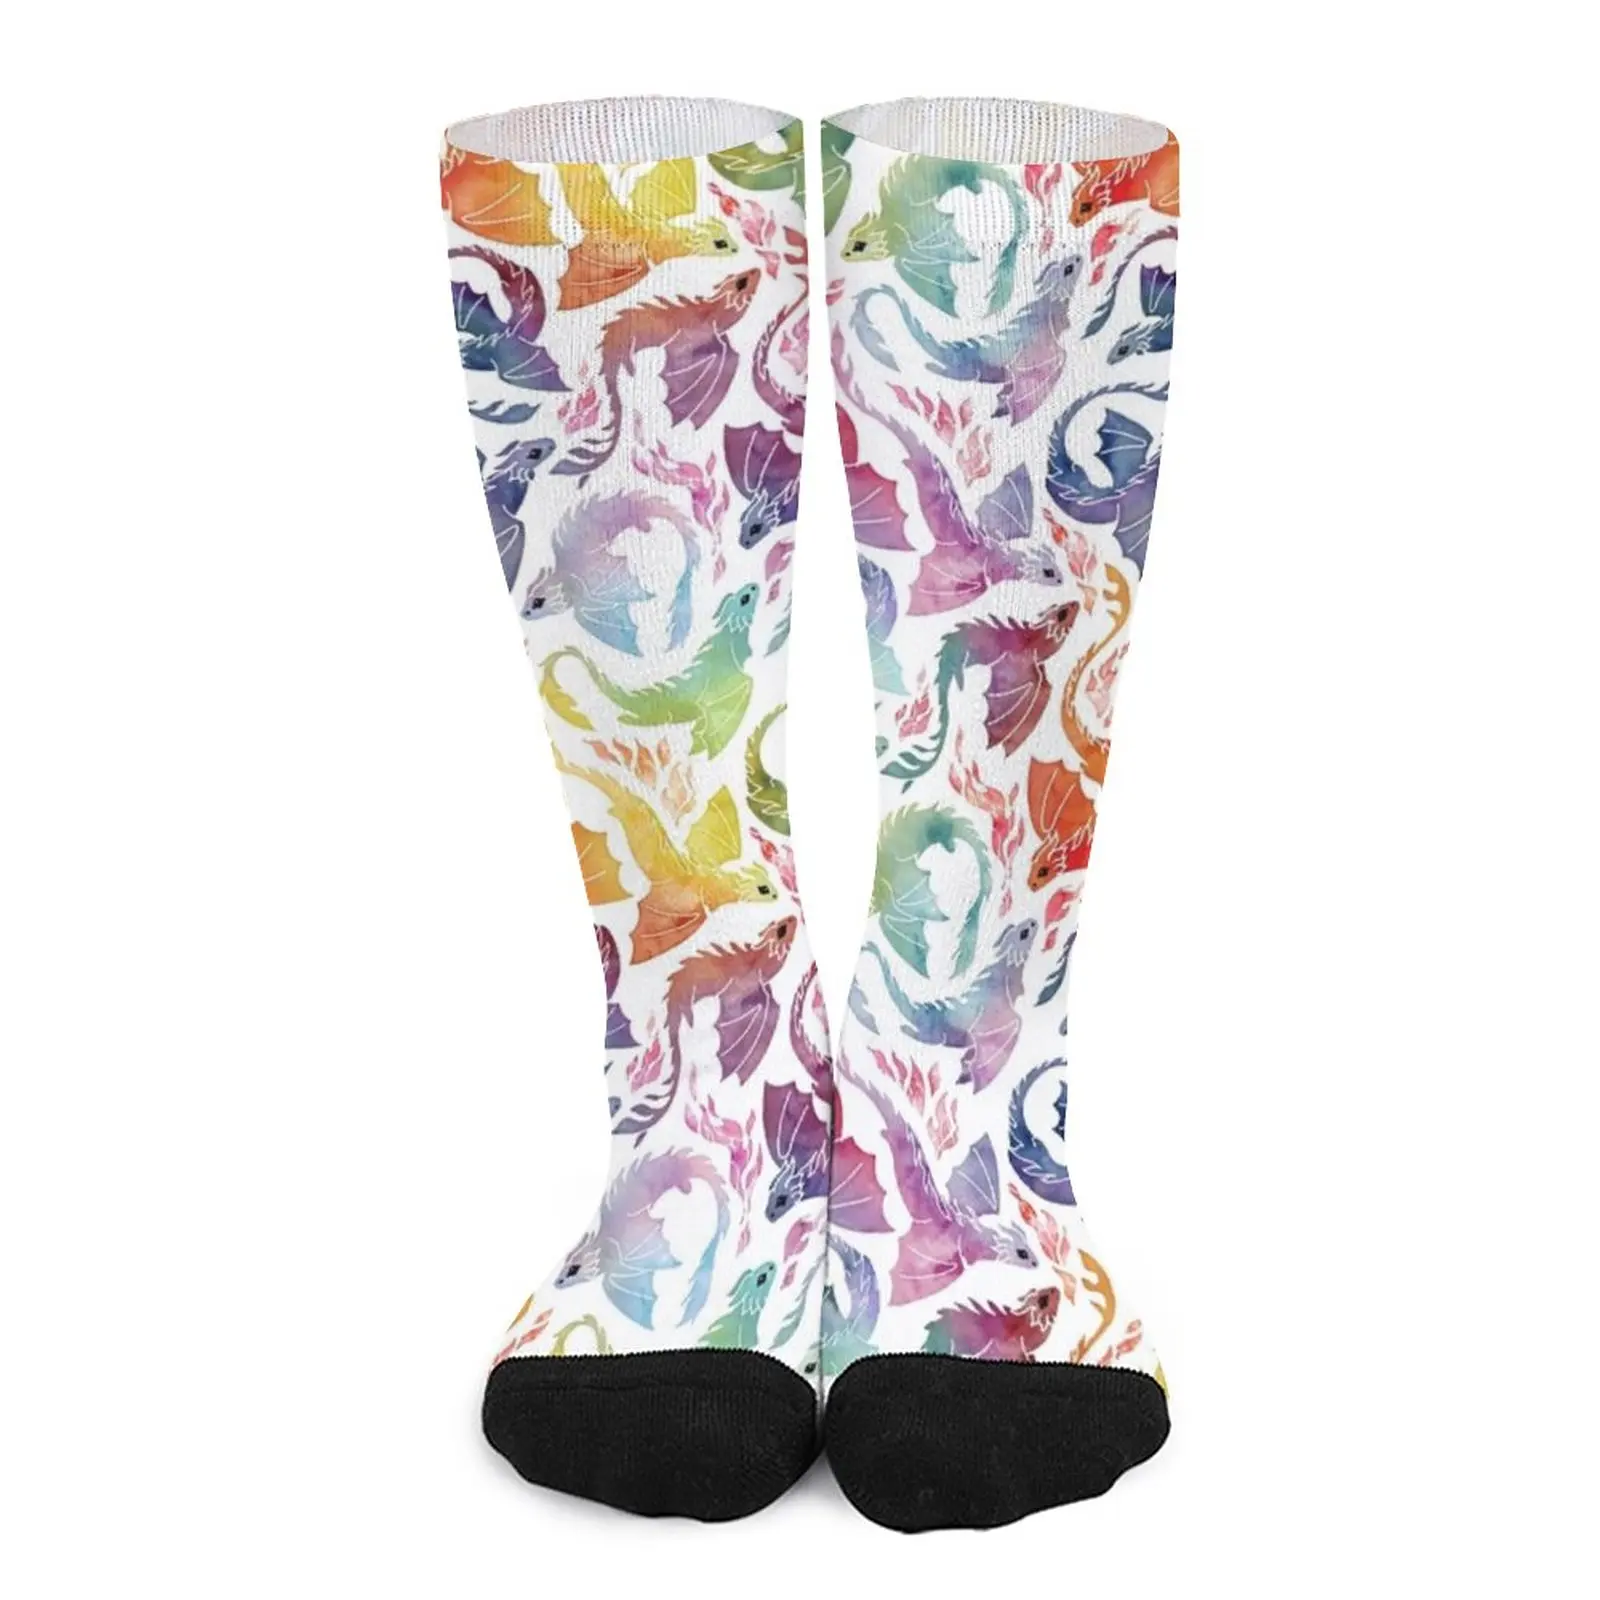 Dragon fire rainbow Socks custom socks funny socks for Women valentines day gift for boyfriend shoes on fire